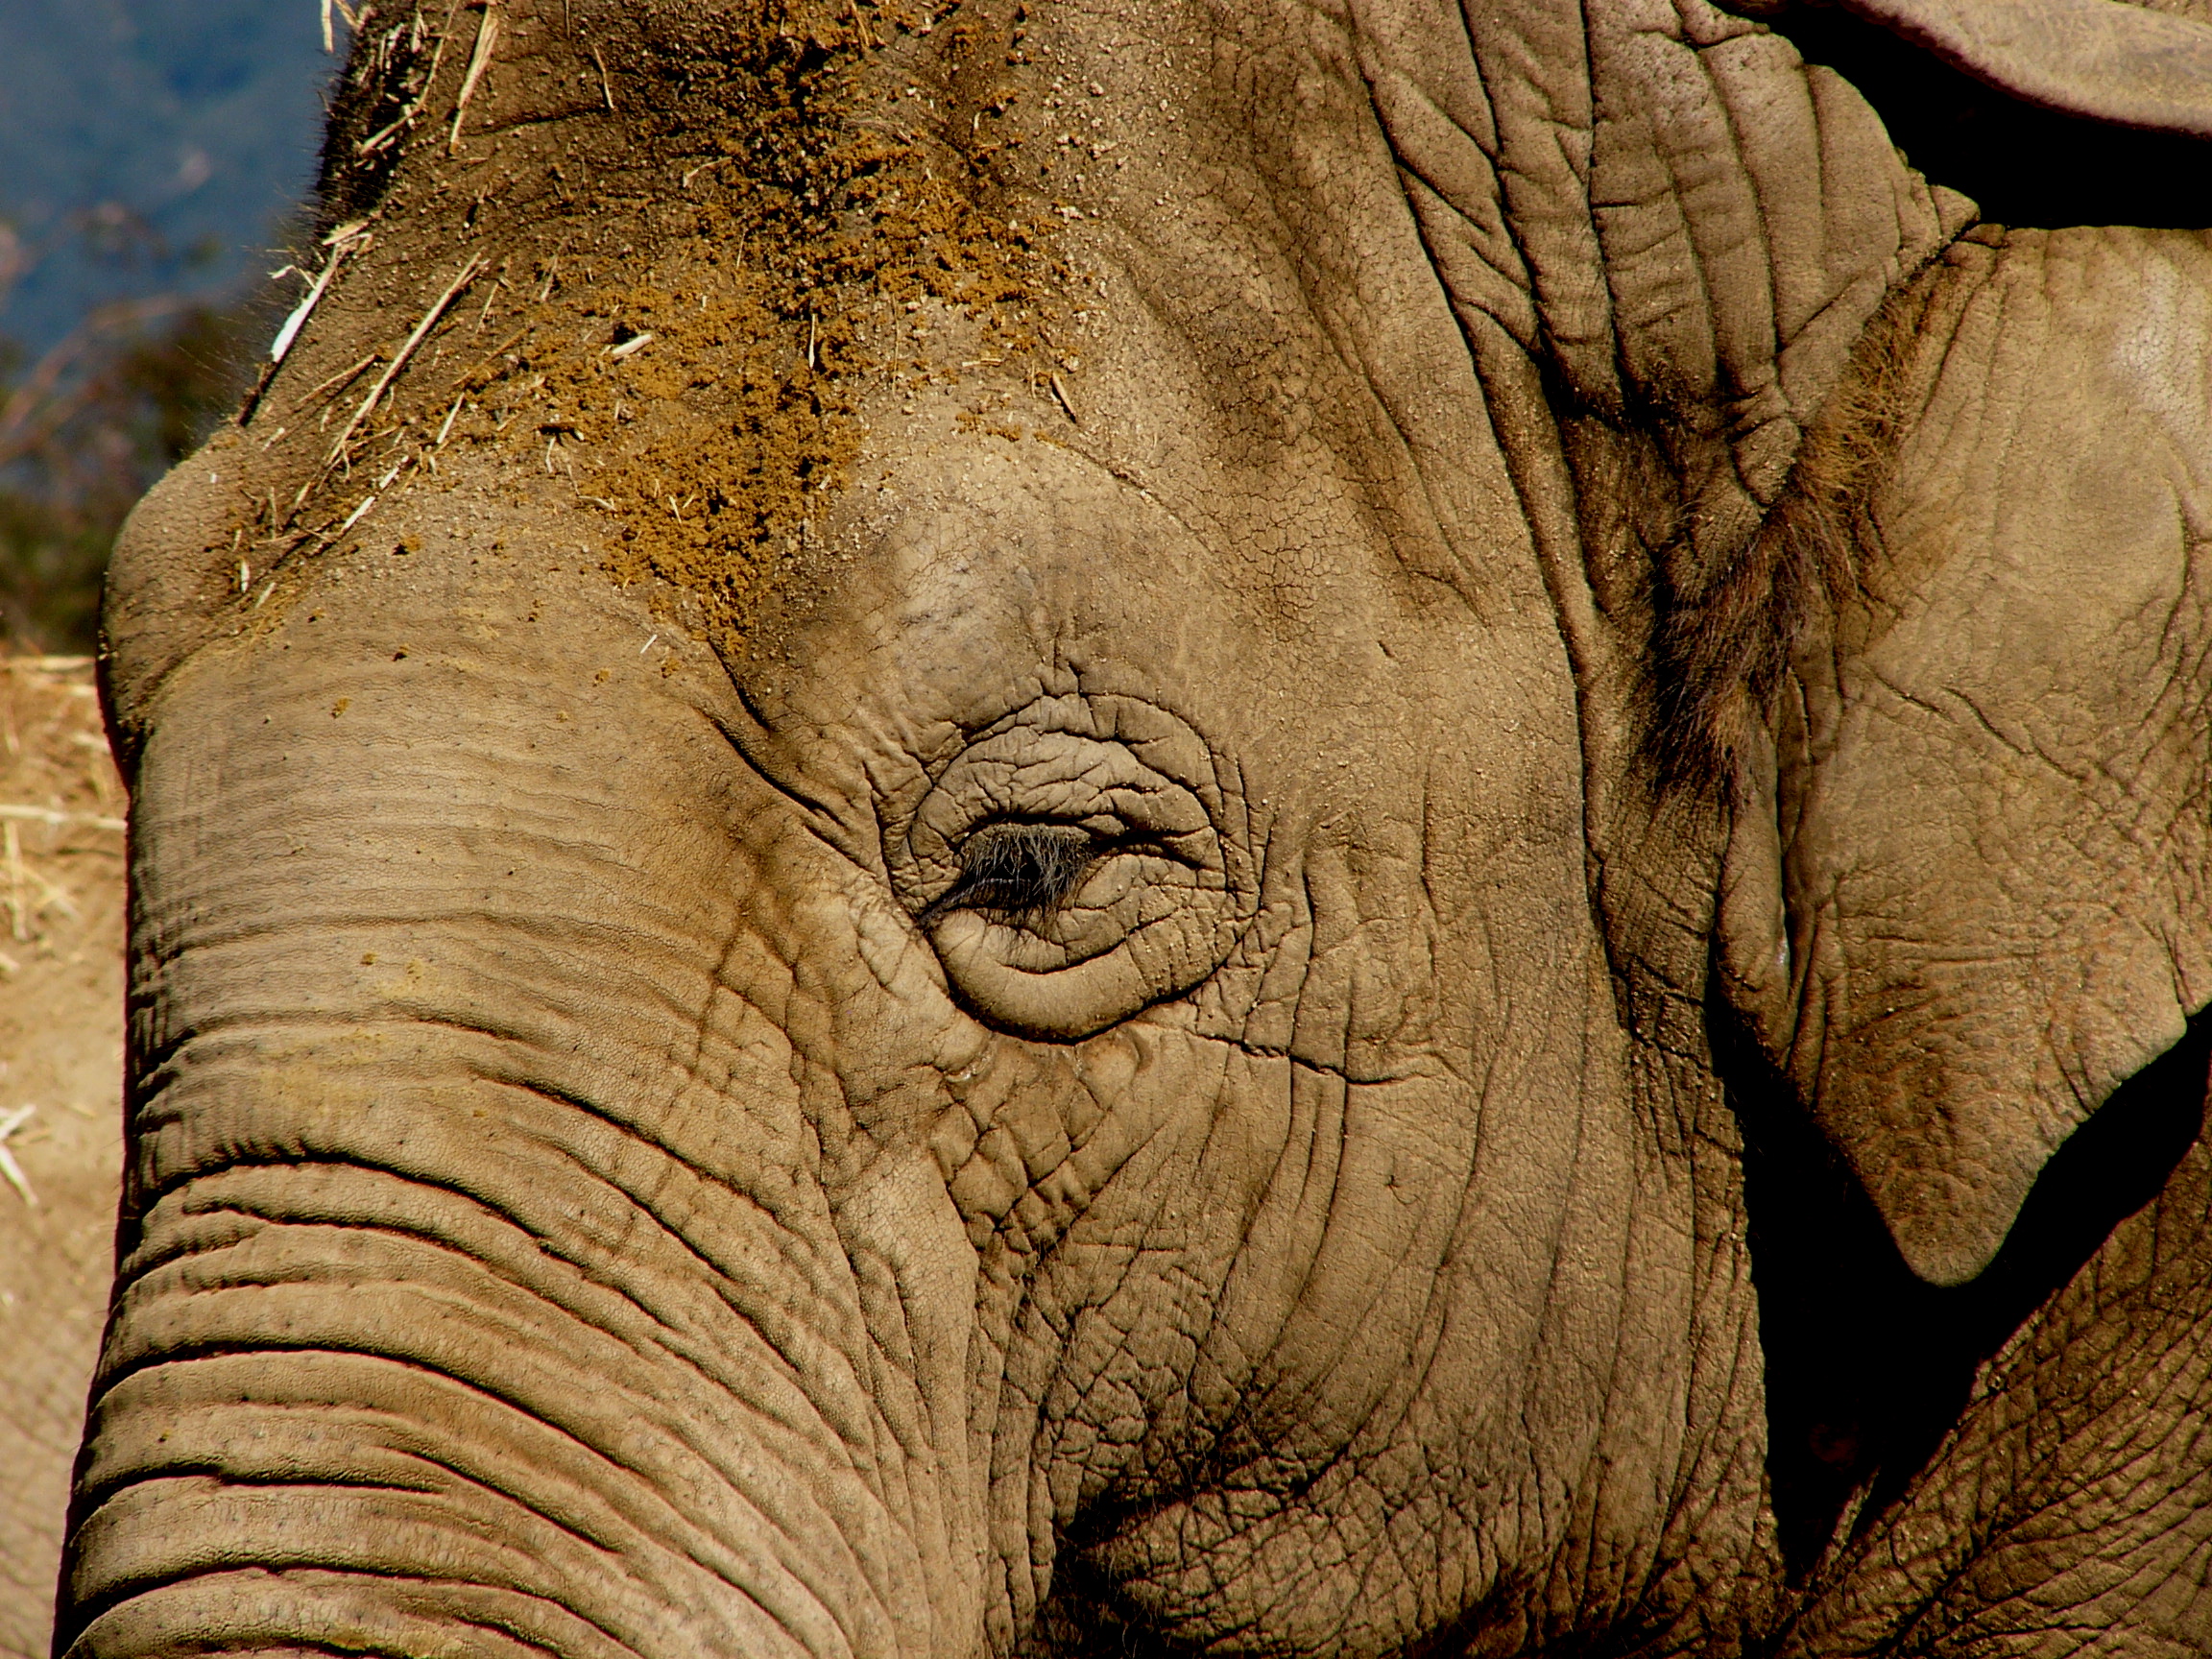 Elephant at Santa Barbara Zoo